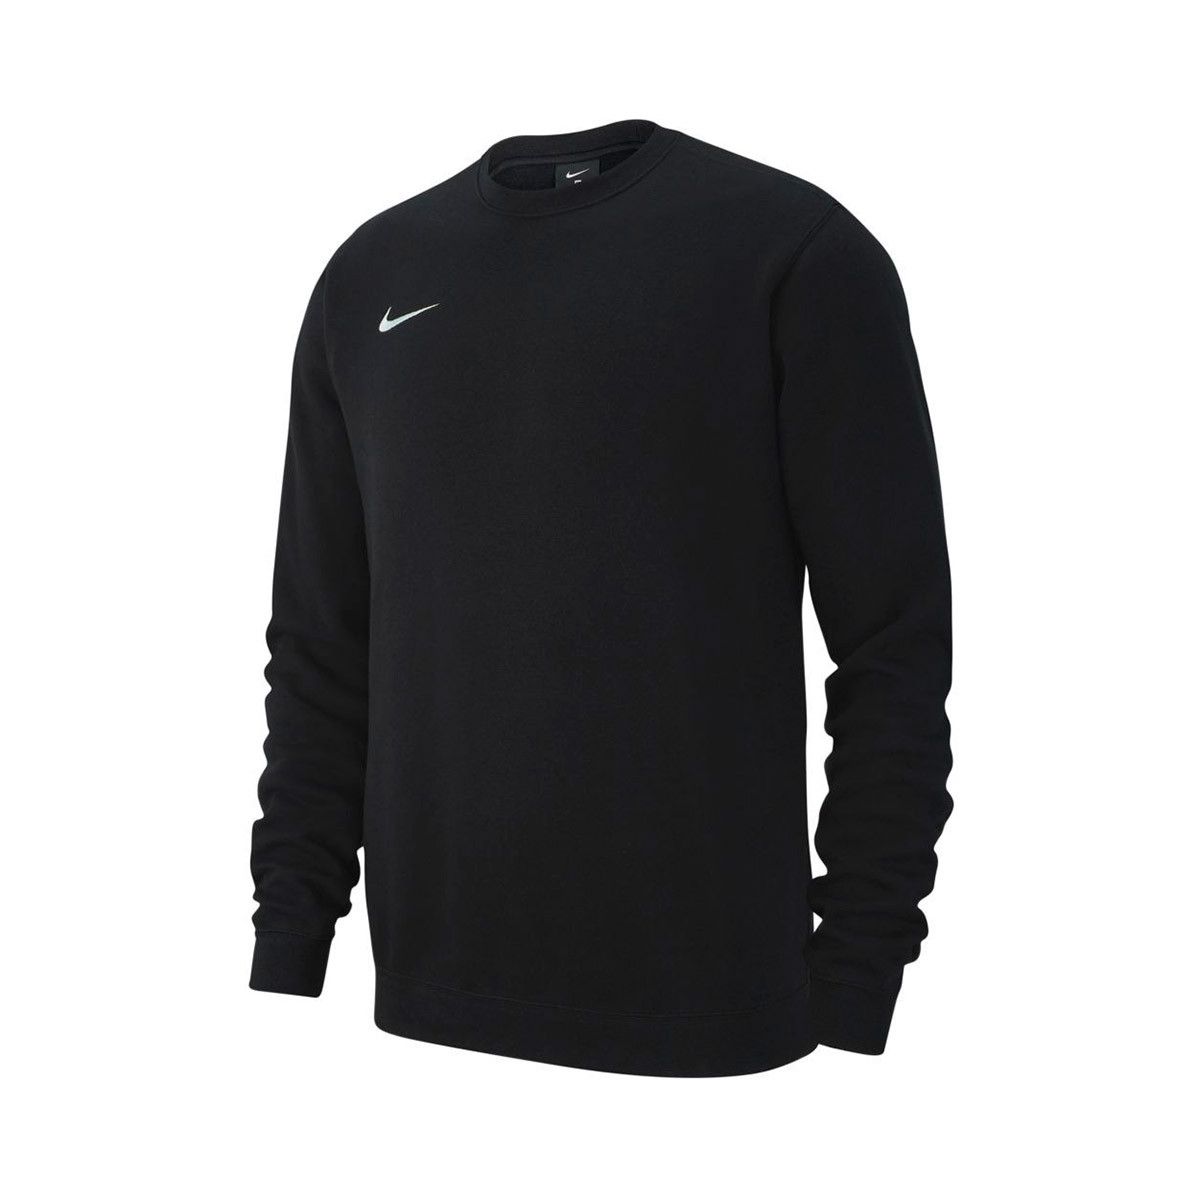 Sweatshirt Nike Club 19 Crew Black 